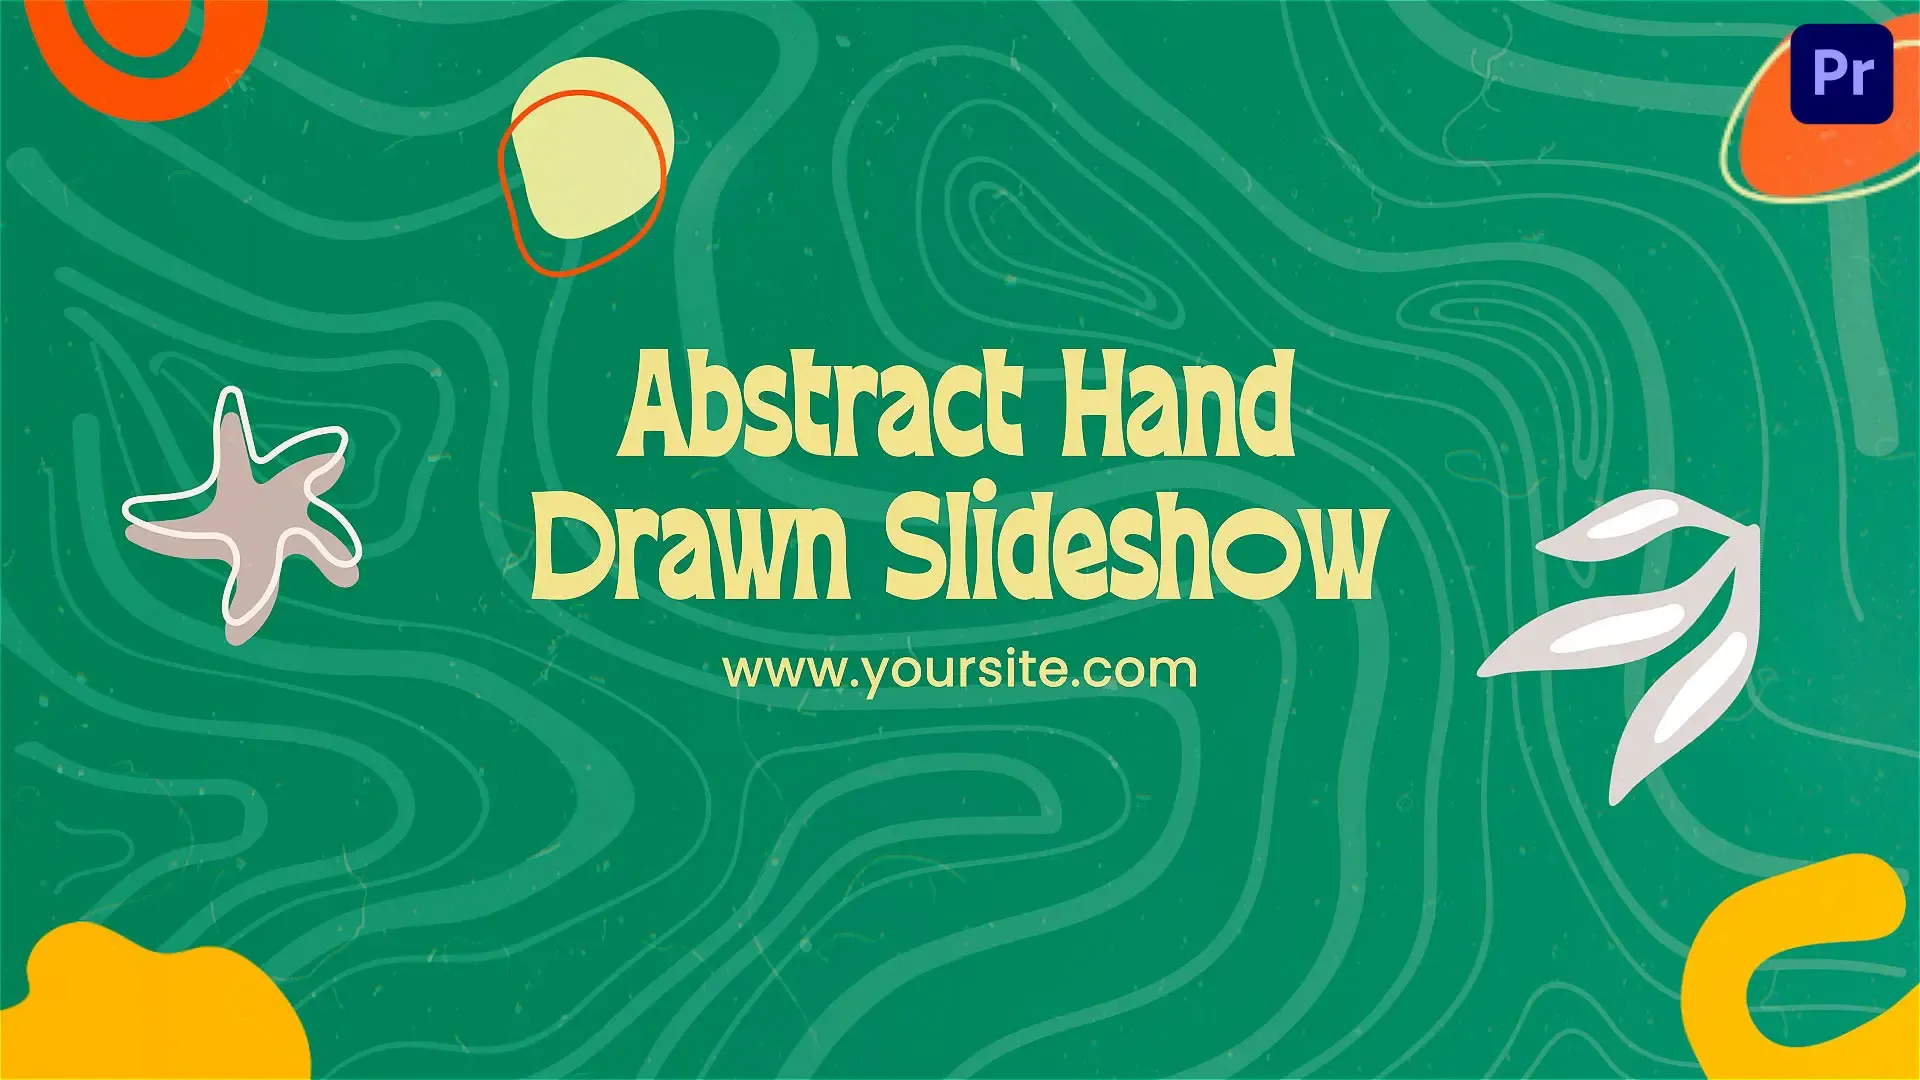 Edgy Elegance Hand-Drawn Slideshow